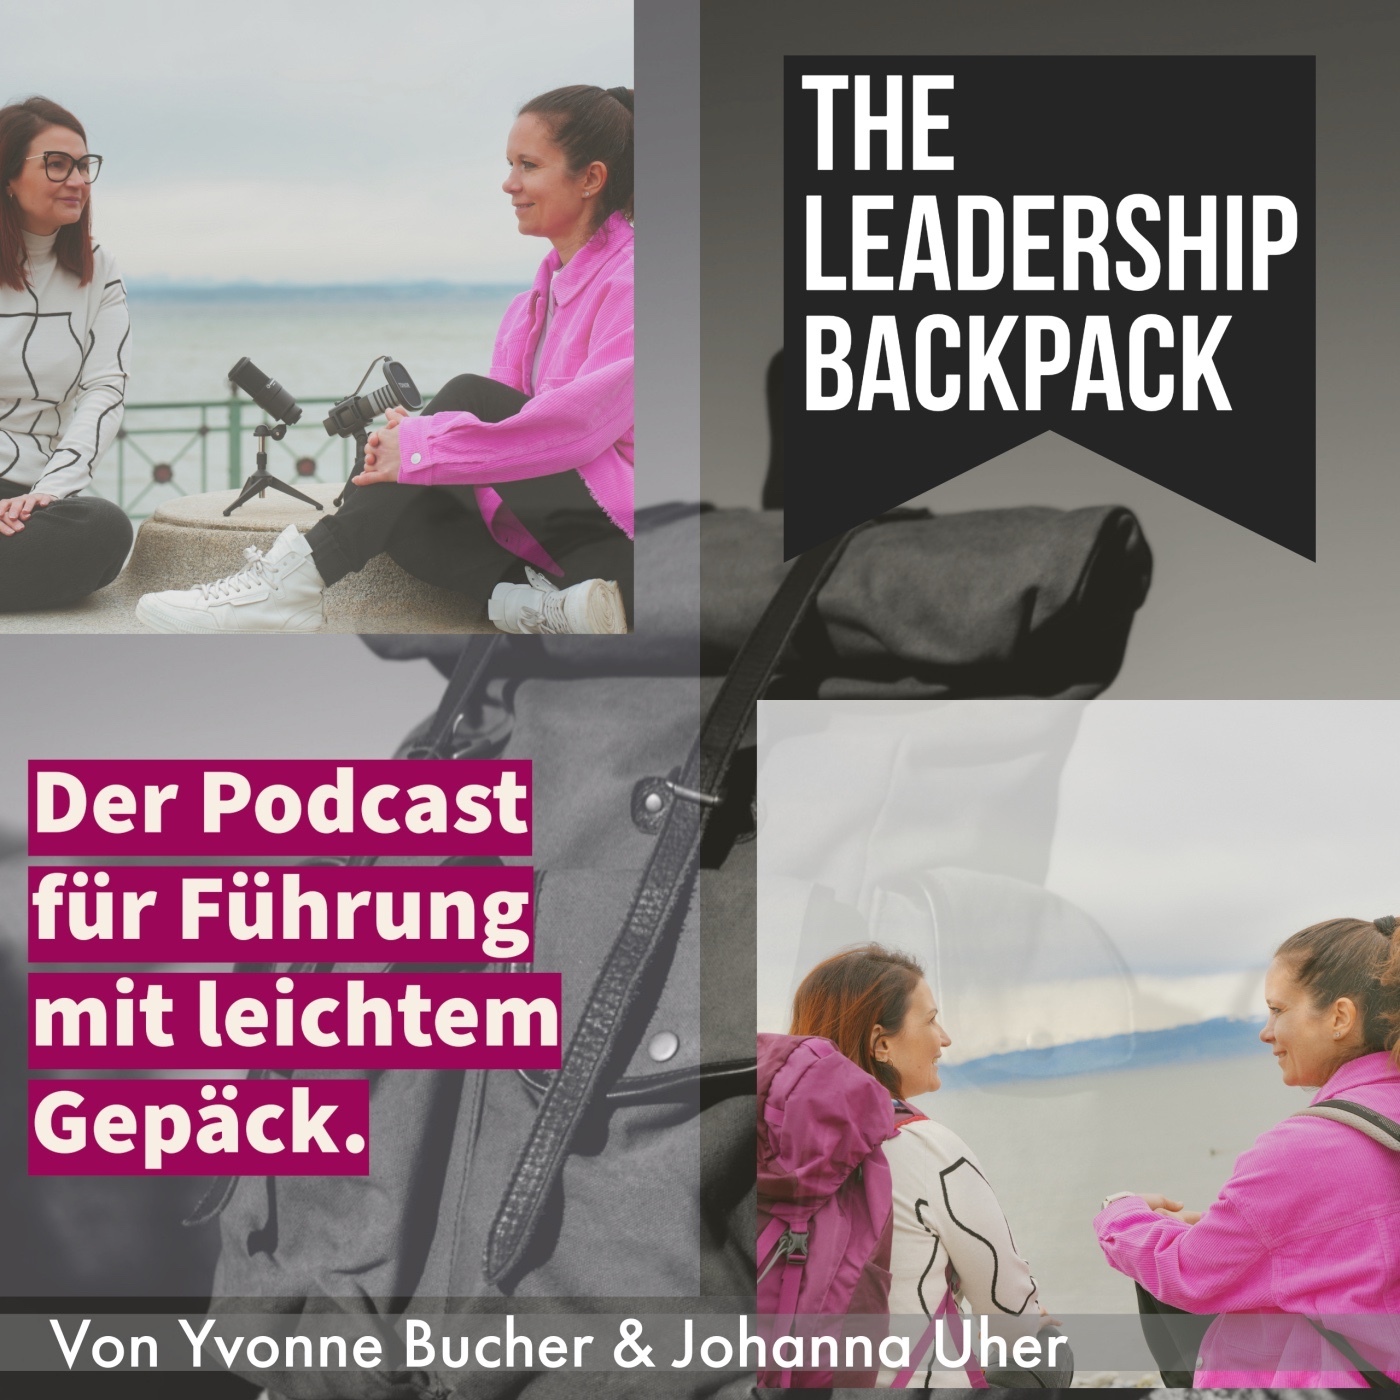 The Leadership Backpack